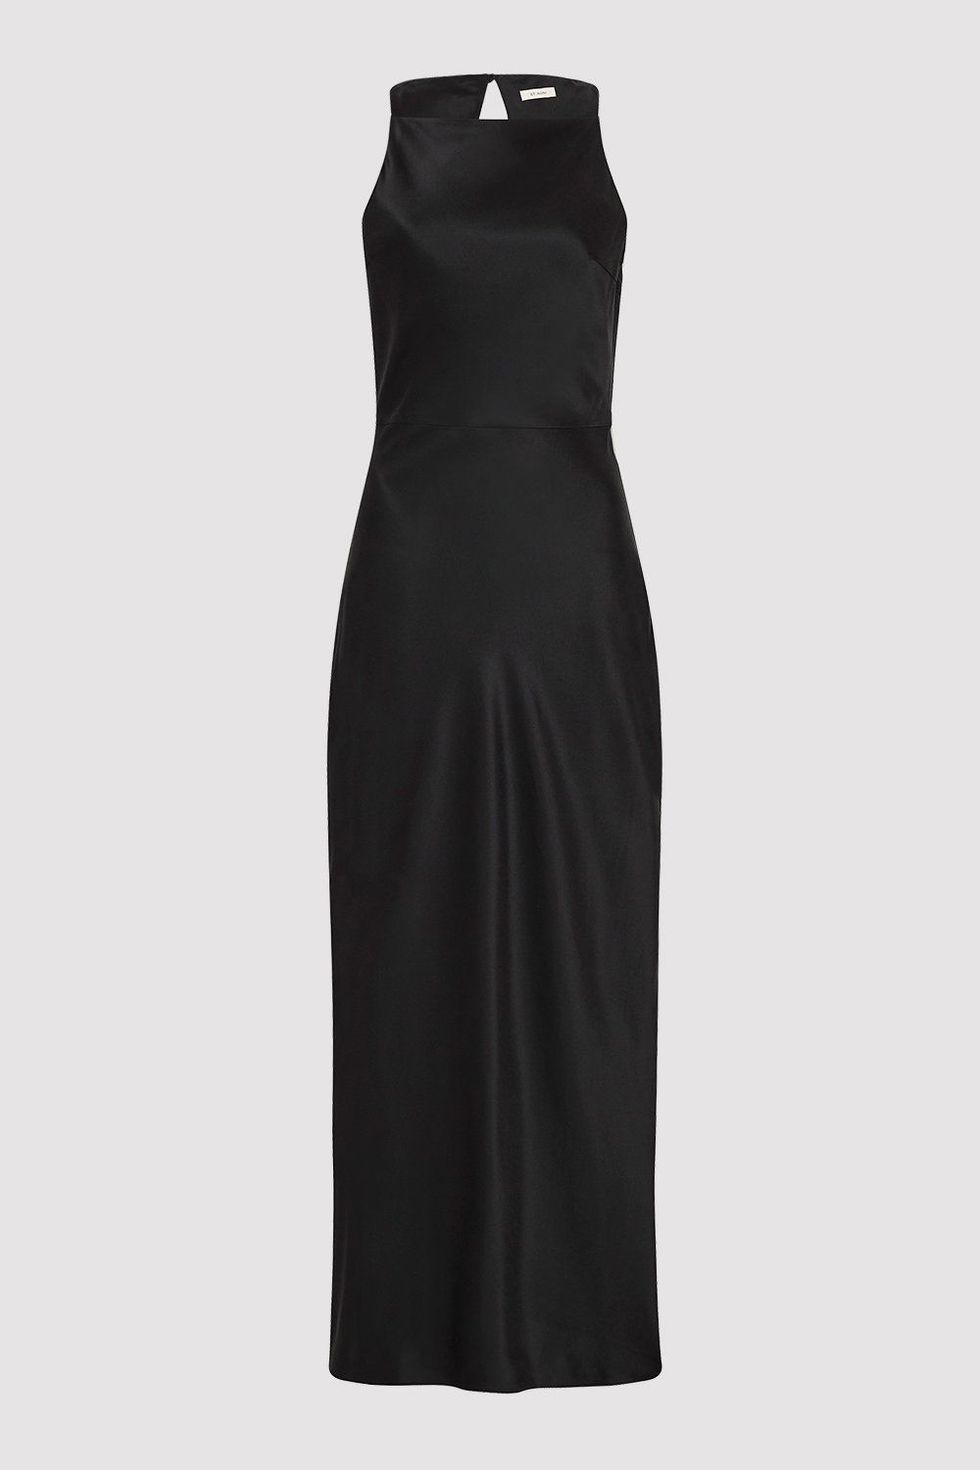 Kendall Jenner穿搭單品推薦：St. Agni絲質黑色洋裝